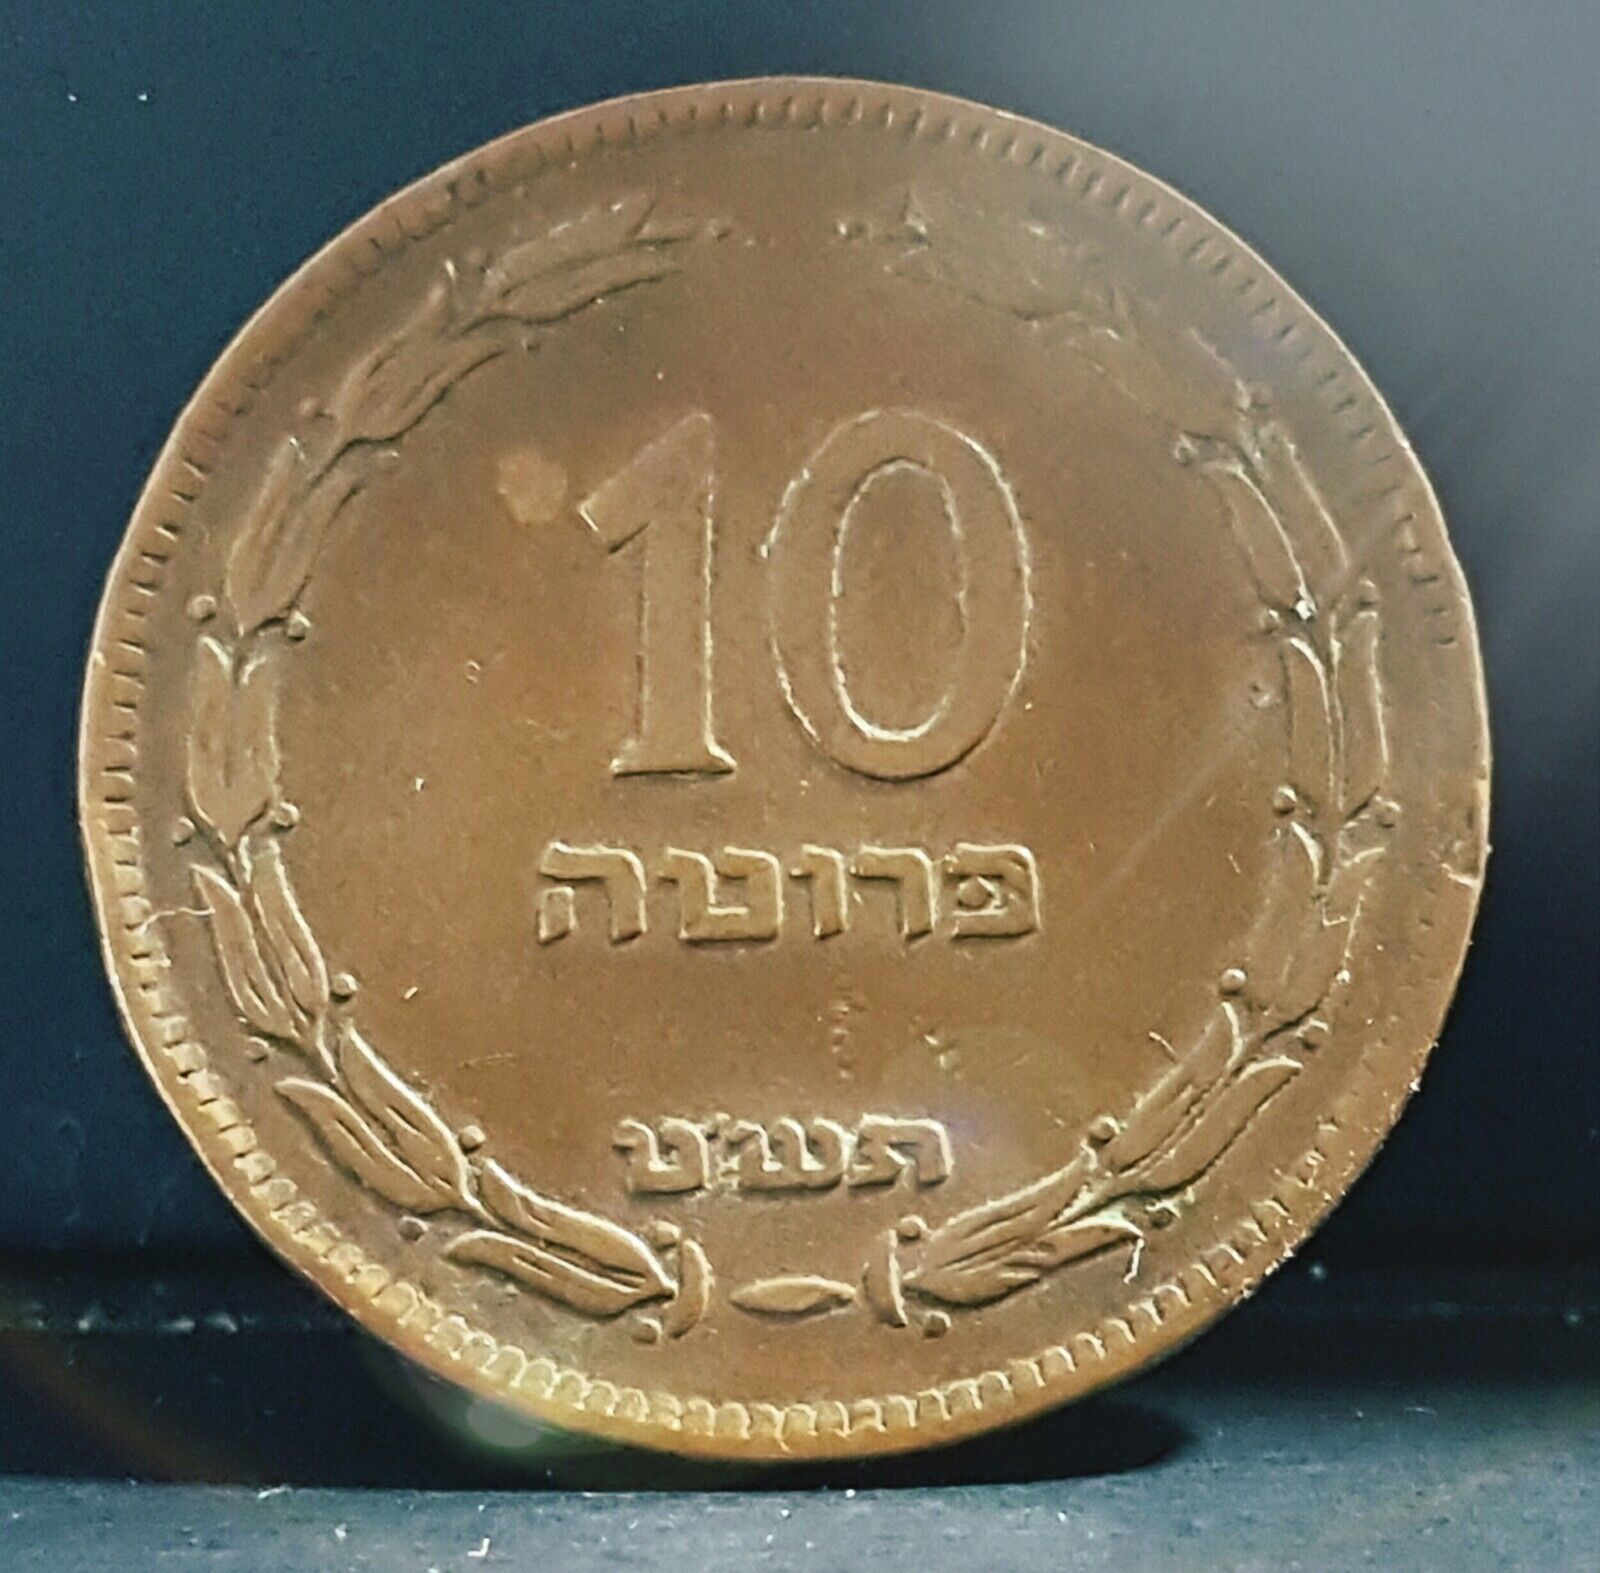 Israel Complete Set Coins Lot of 30 Coin Pruta Sheqalim Sheqel Agorot Since 1949 Без бренда - фотография #7